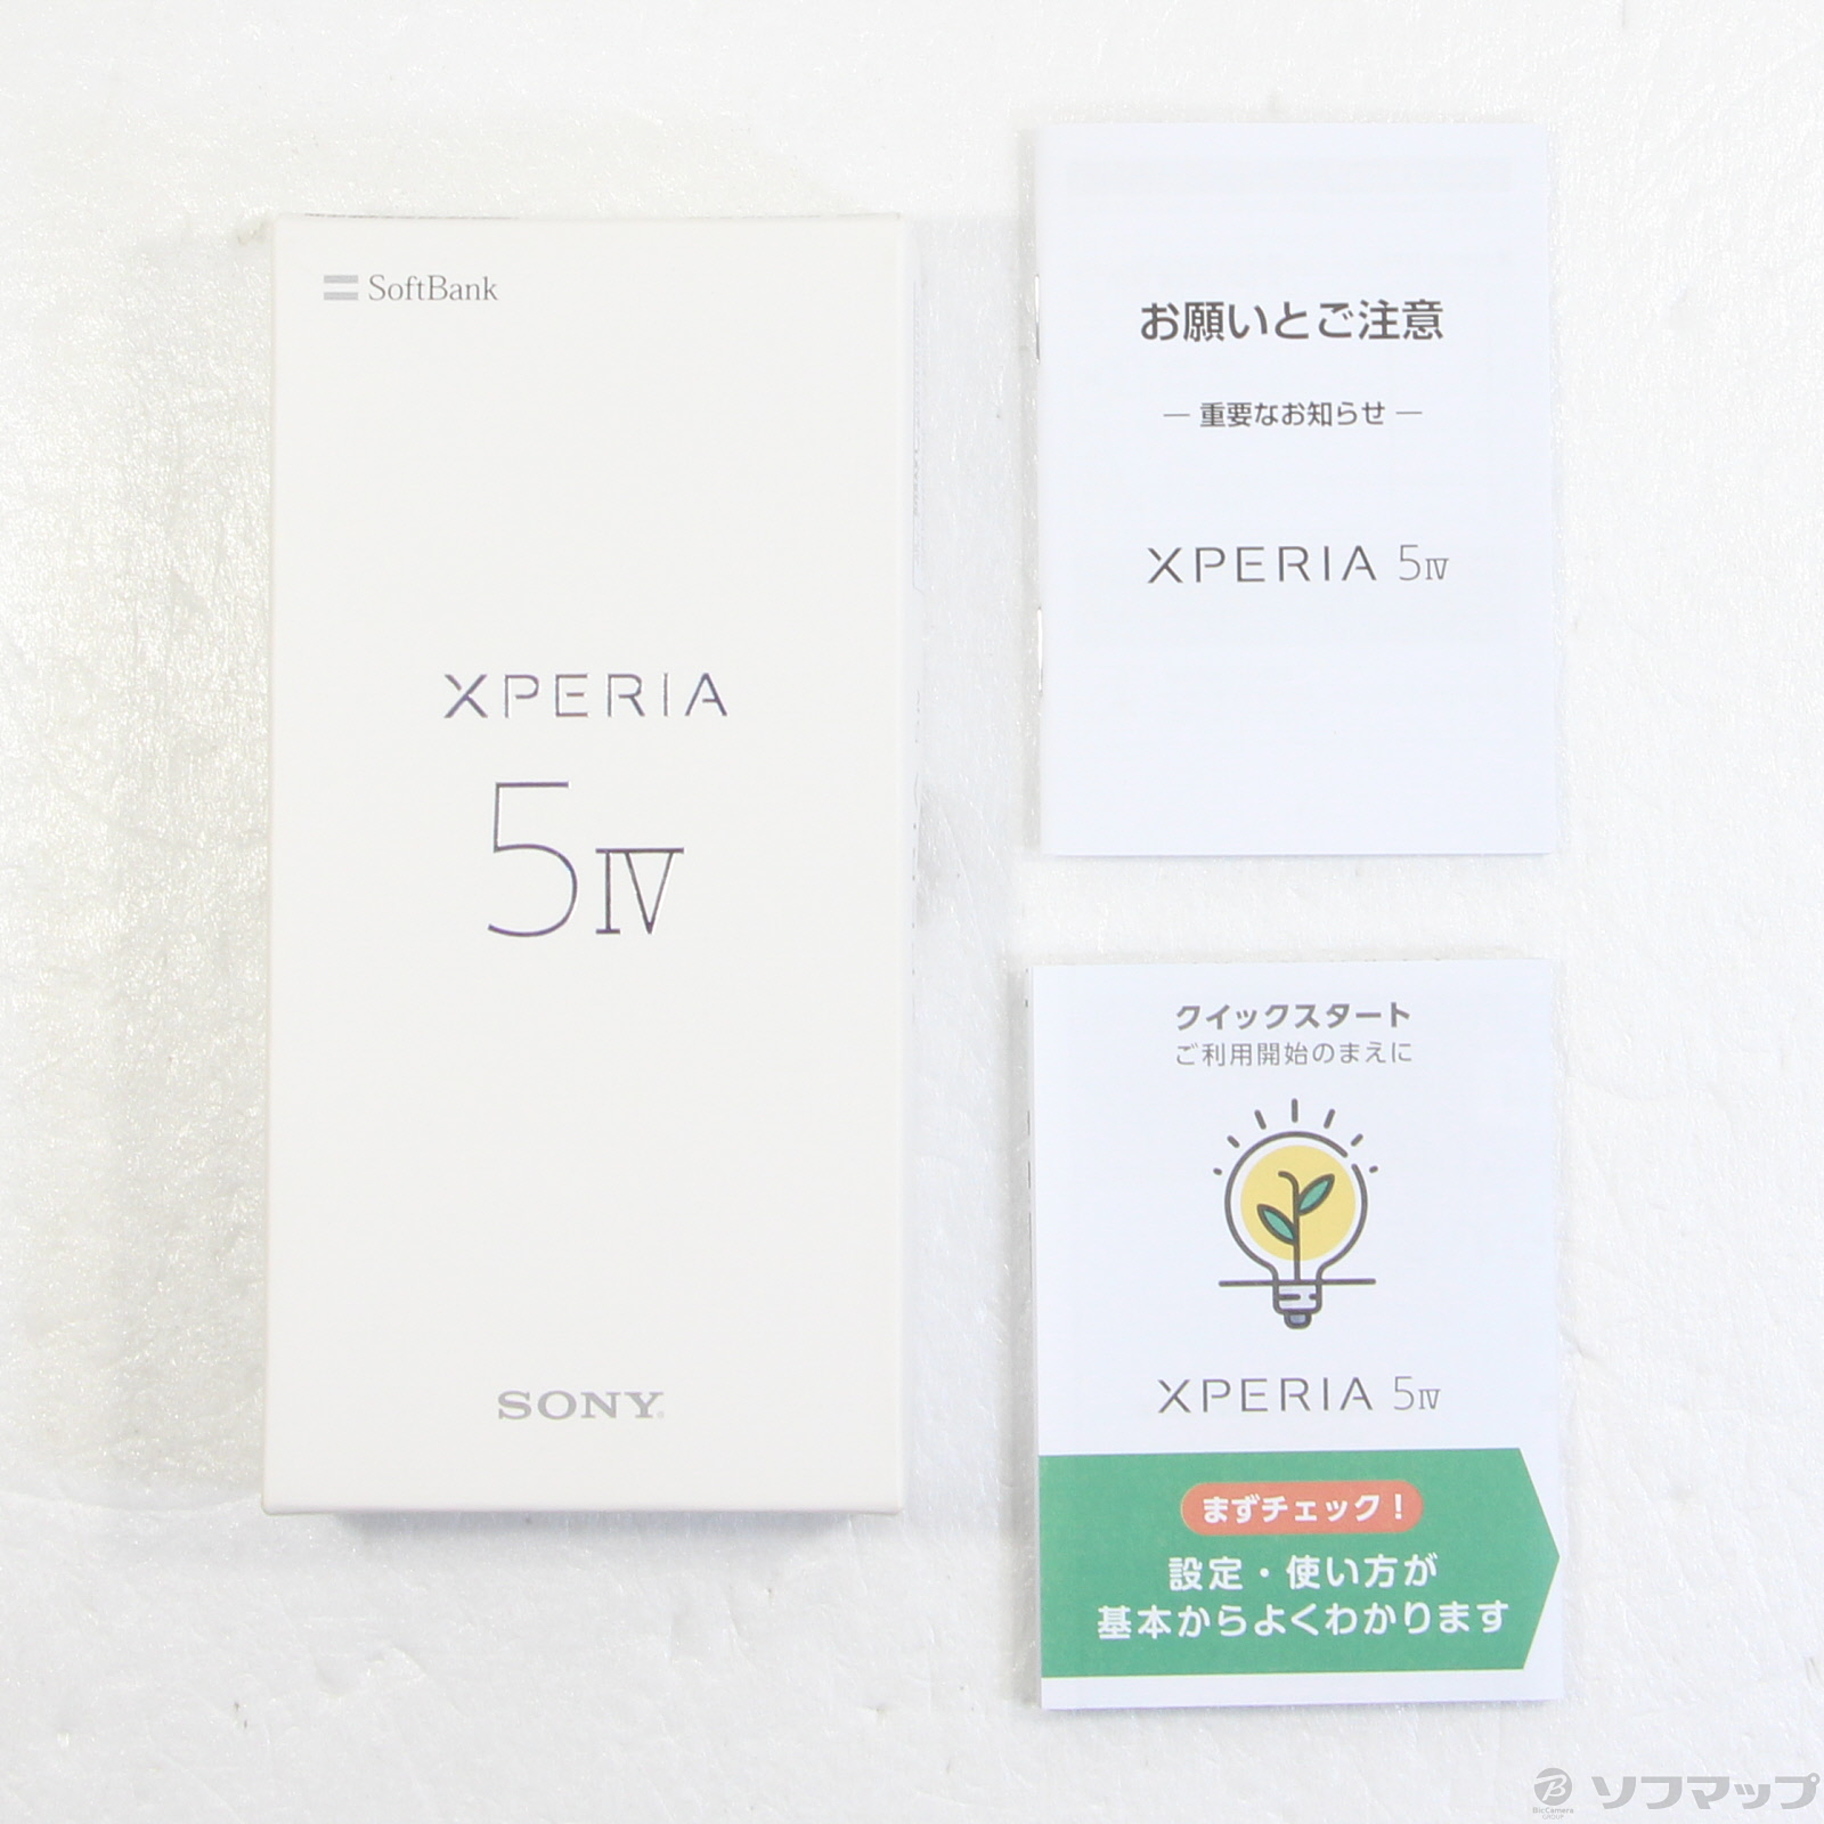 Xperia IV エクリュホワイト 128 GB Softbank